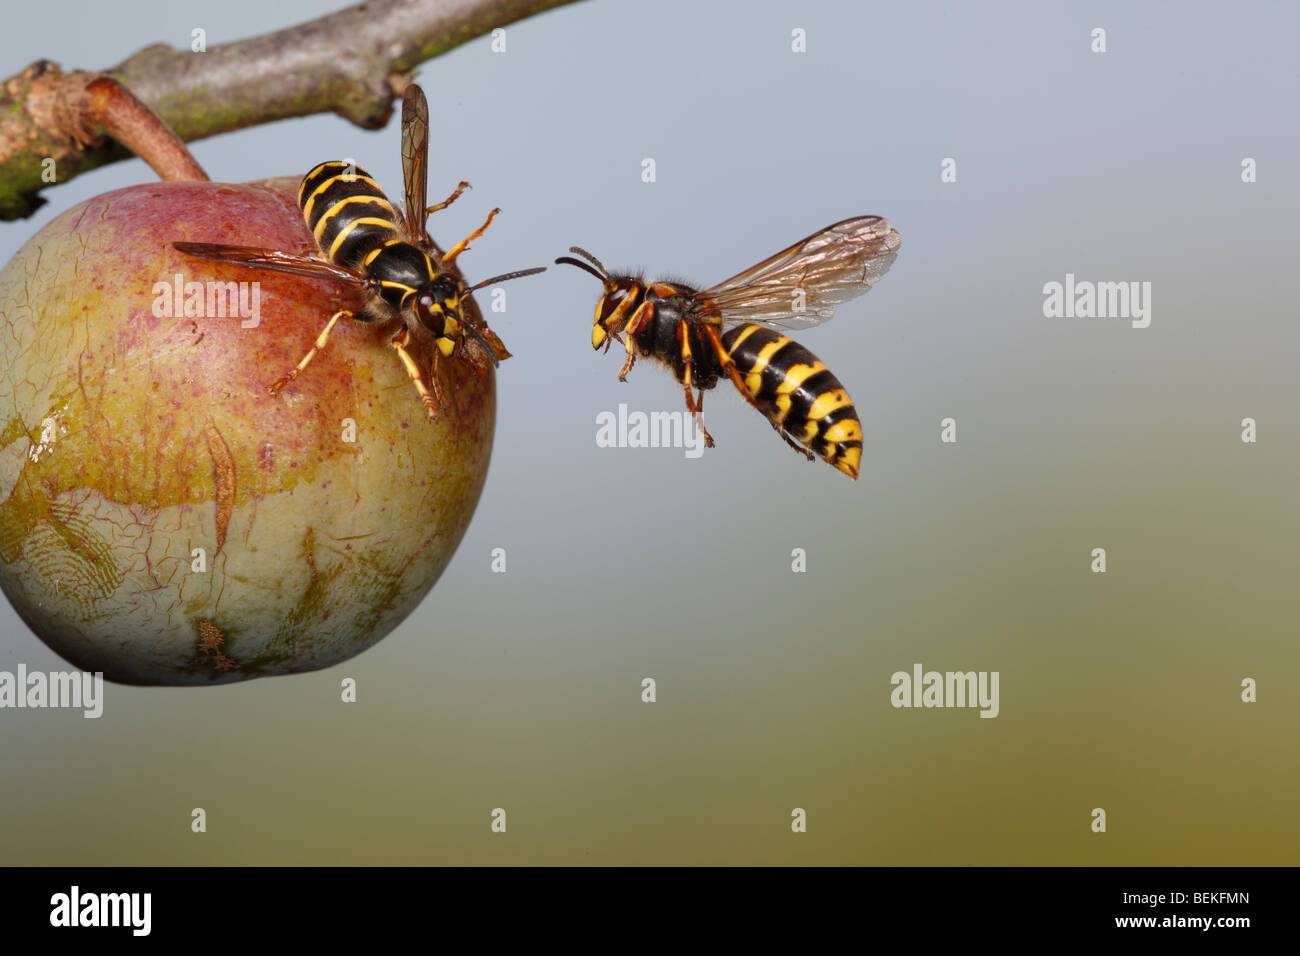 Median wasp (Dolichovespula media) feeding on greengage Stock Photo